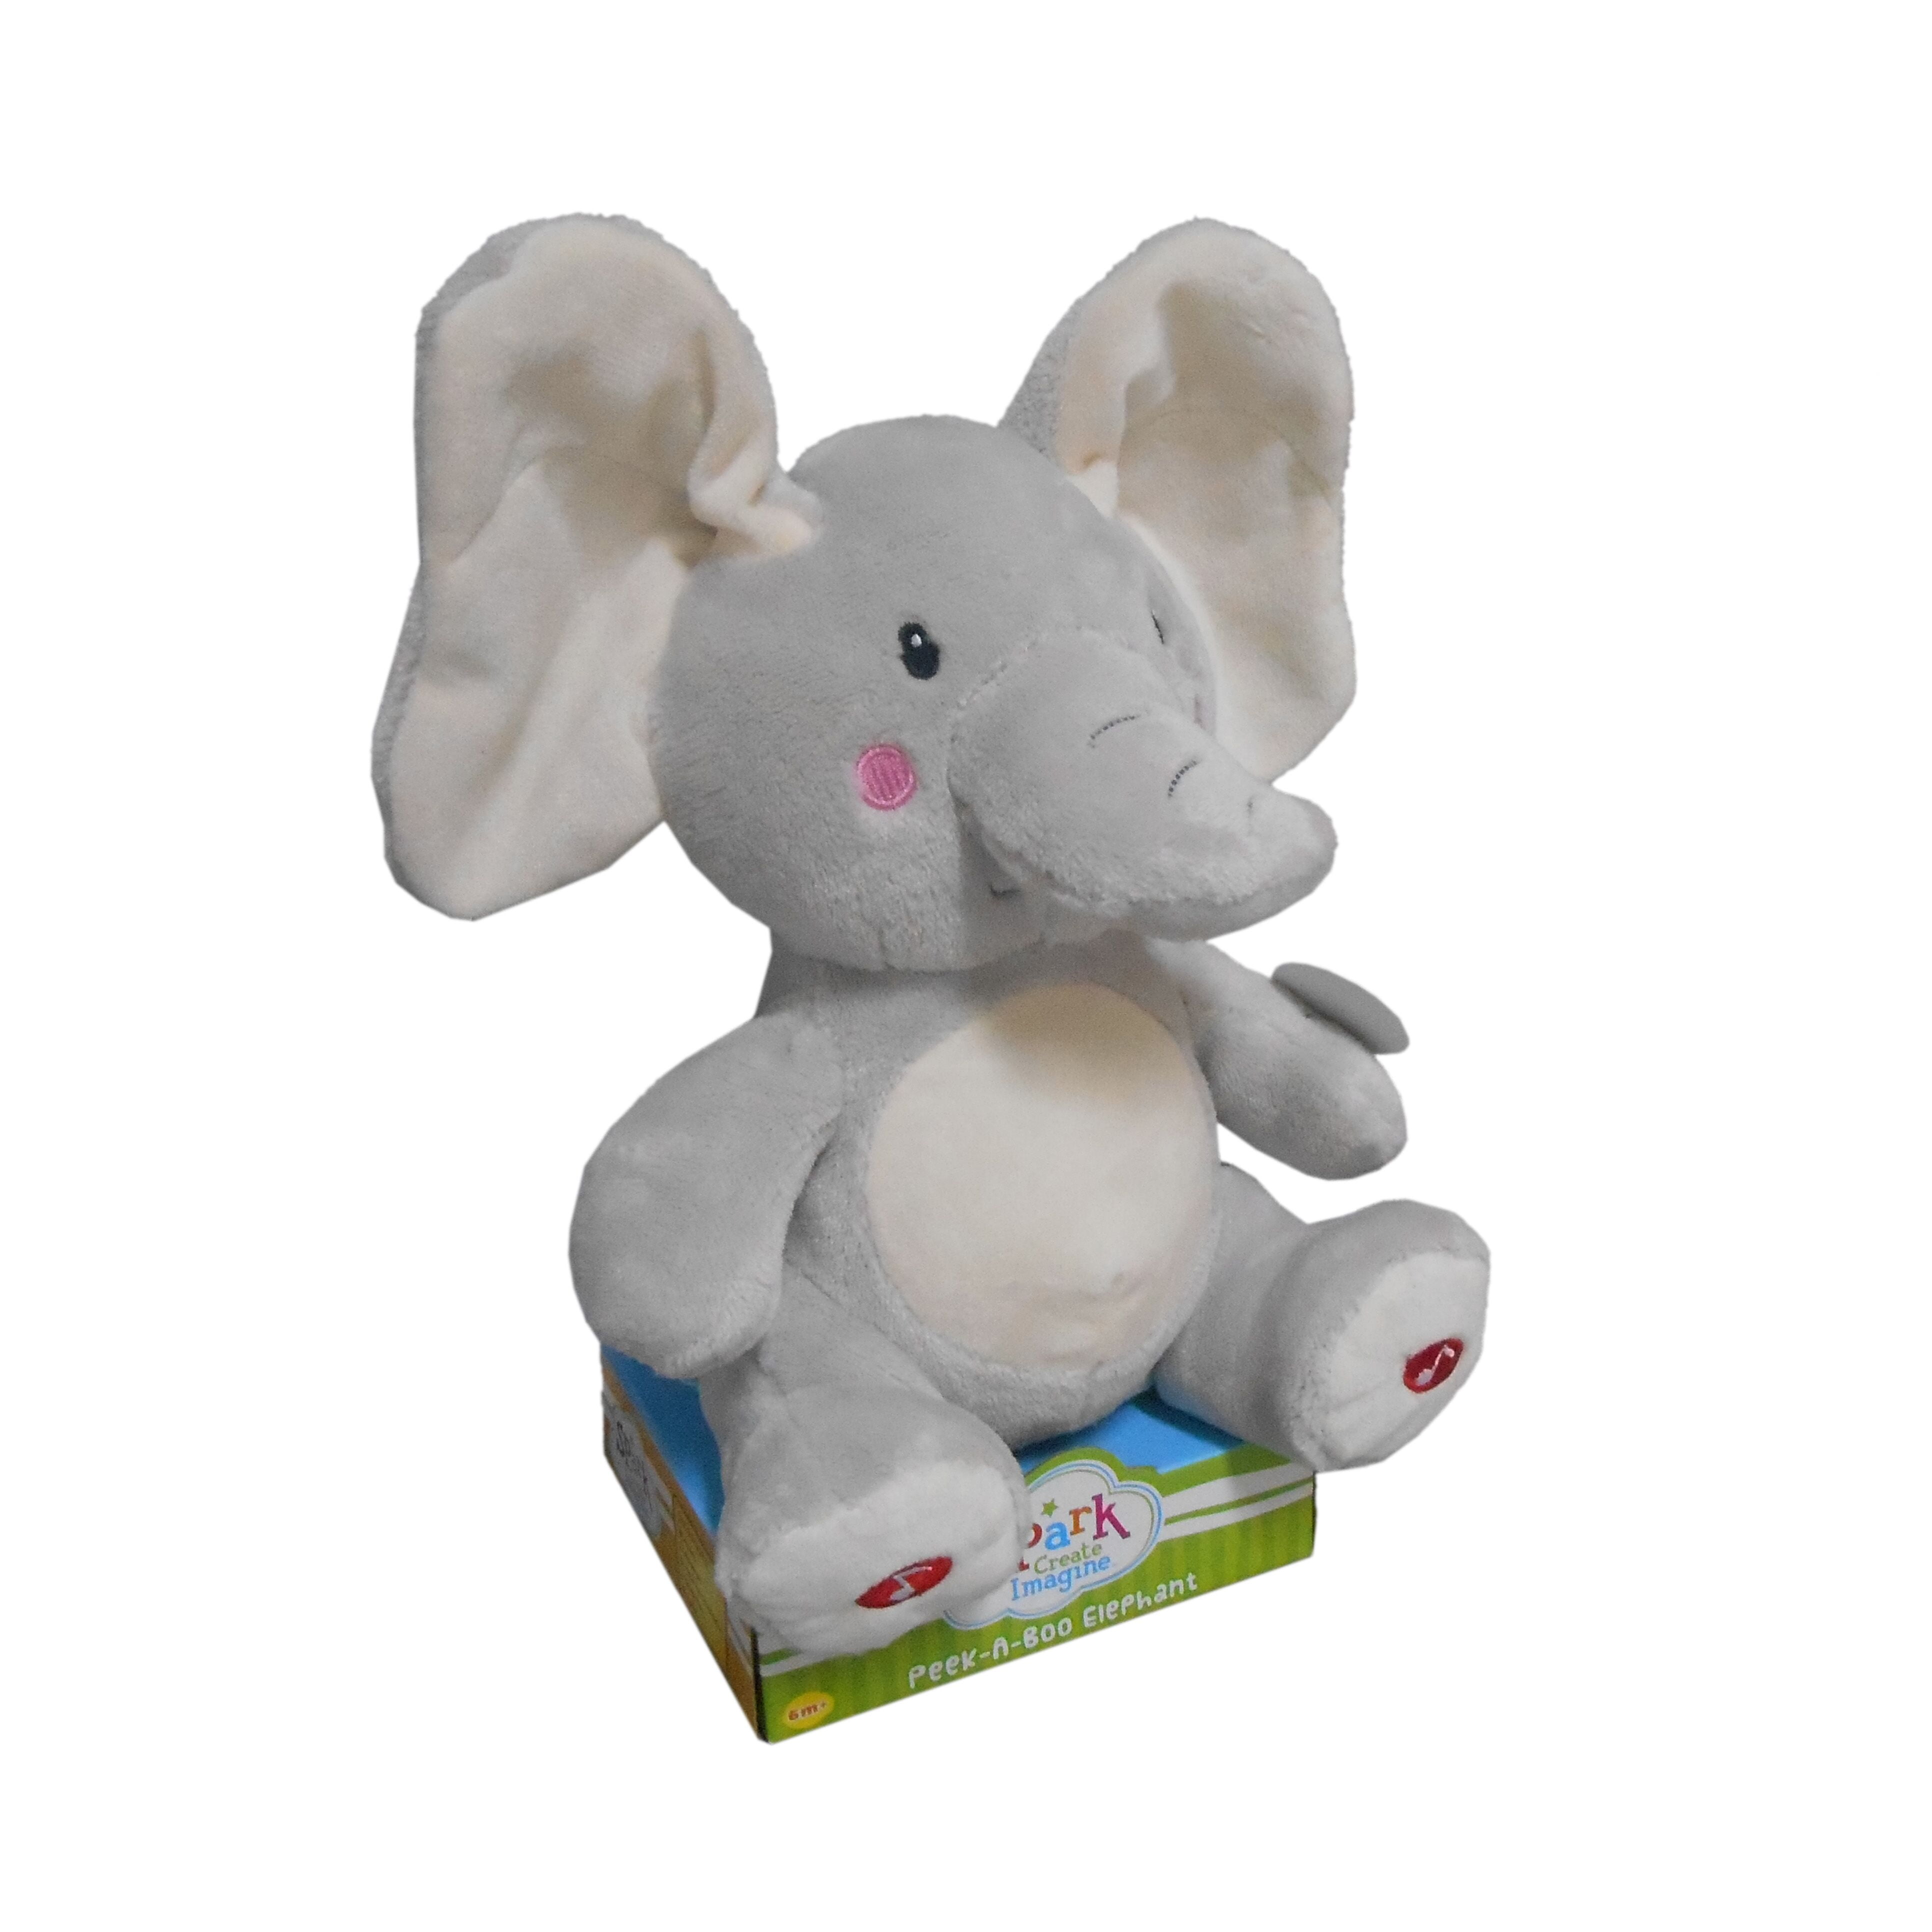 elephant peek a boo plush toy